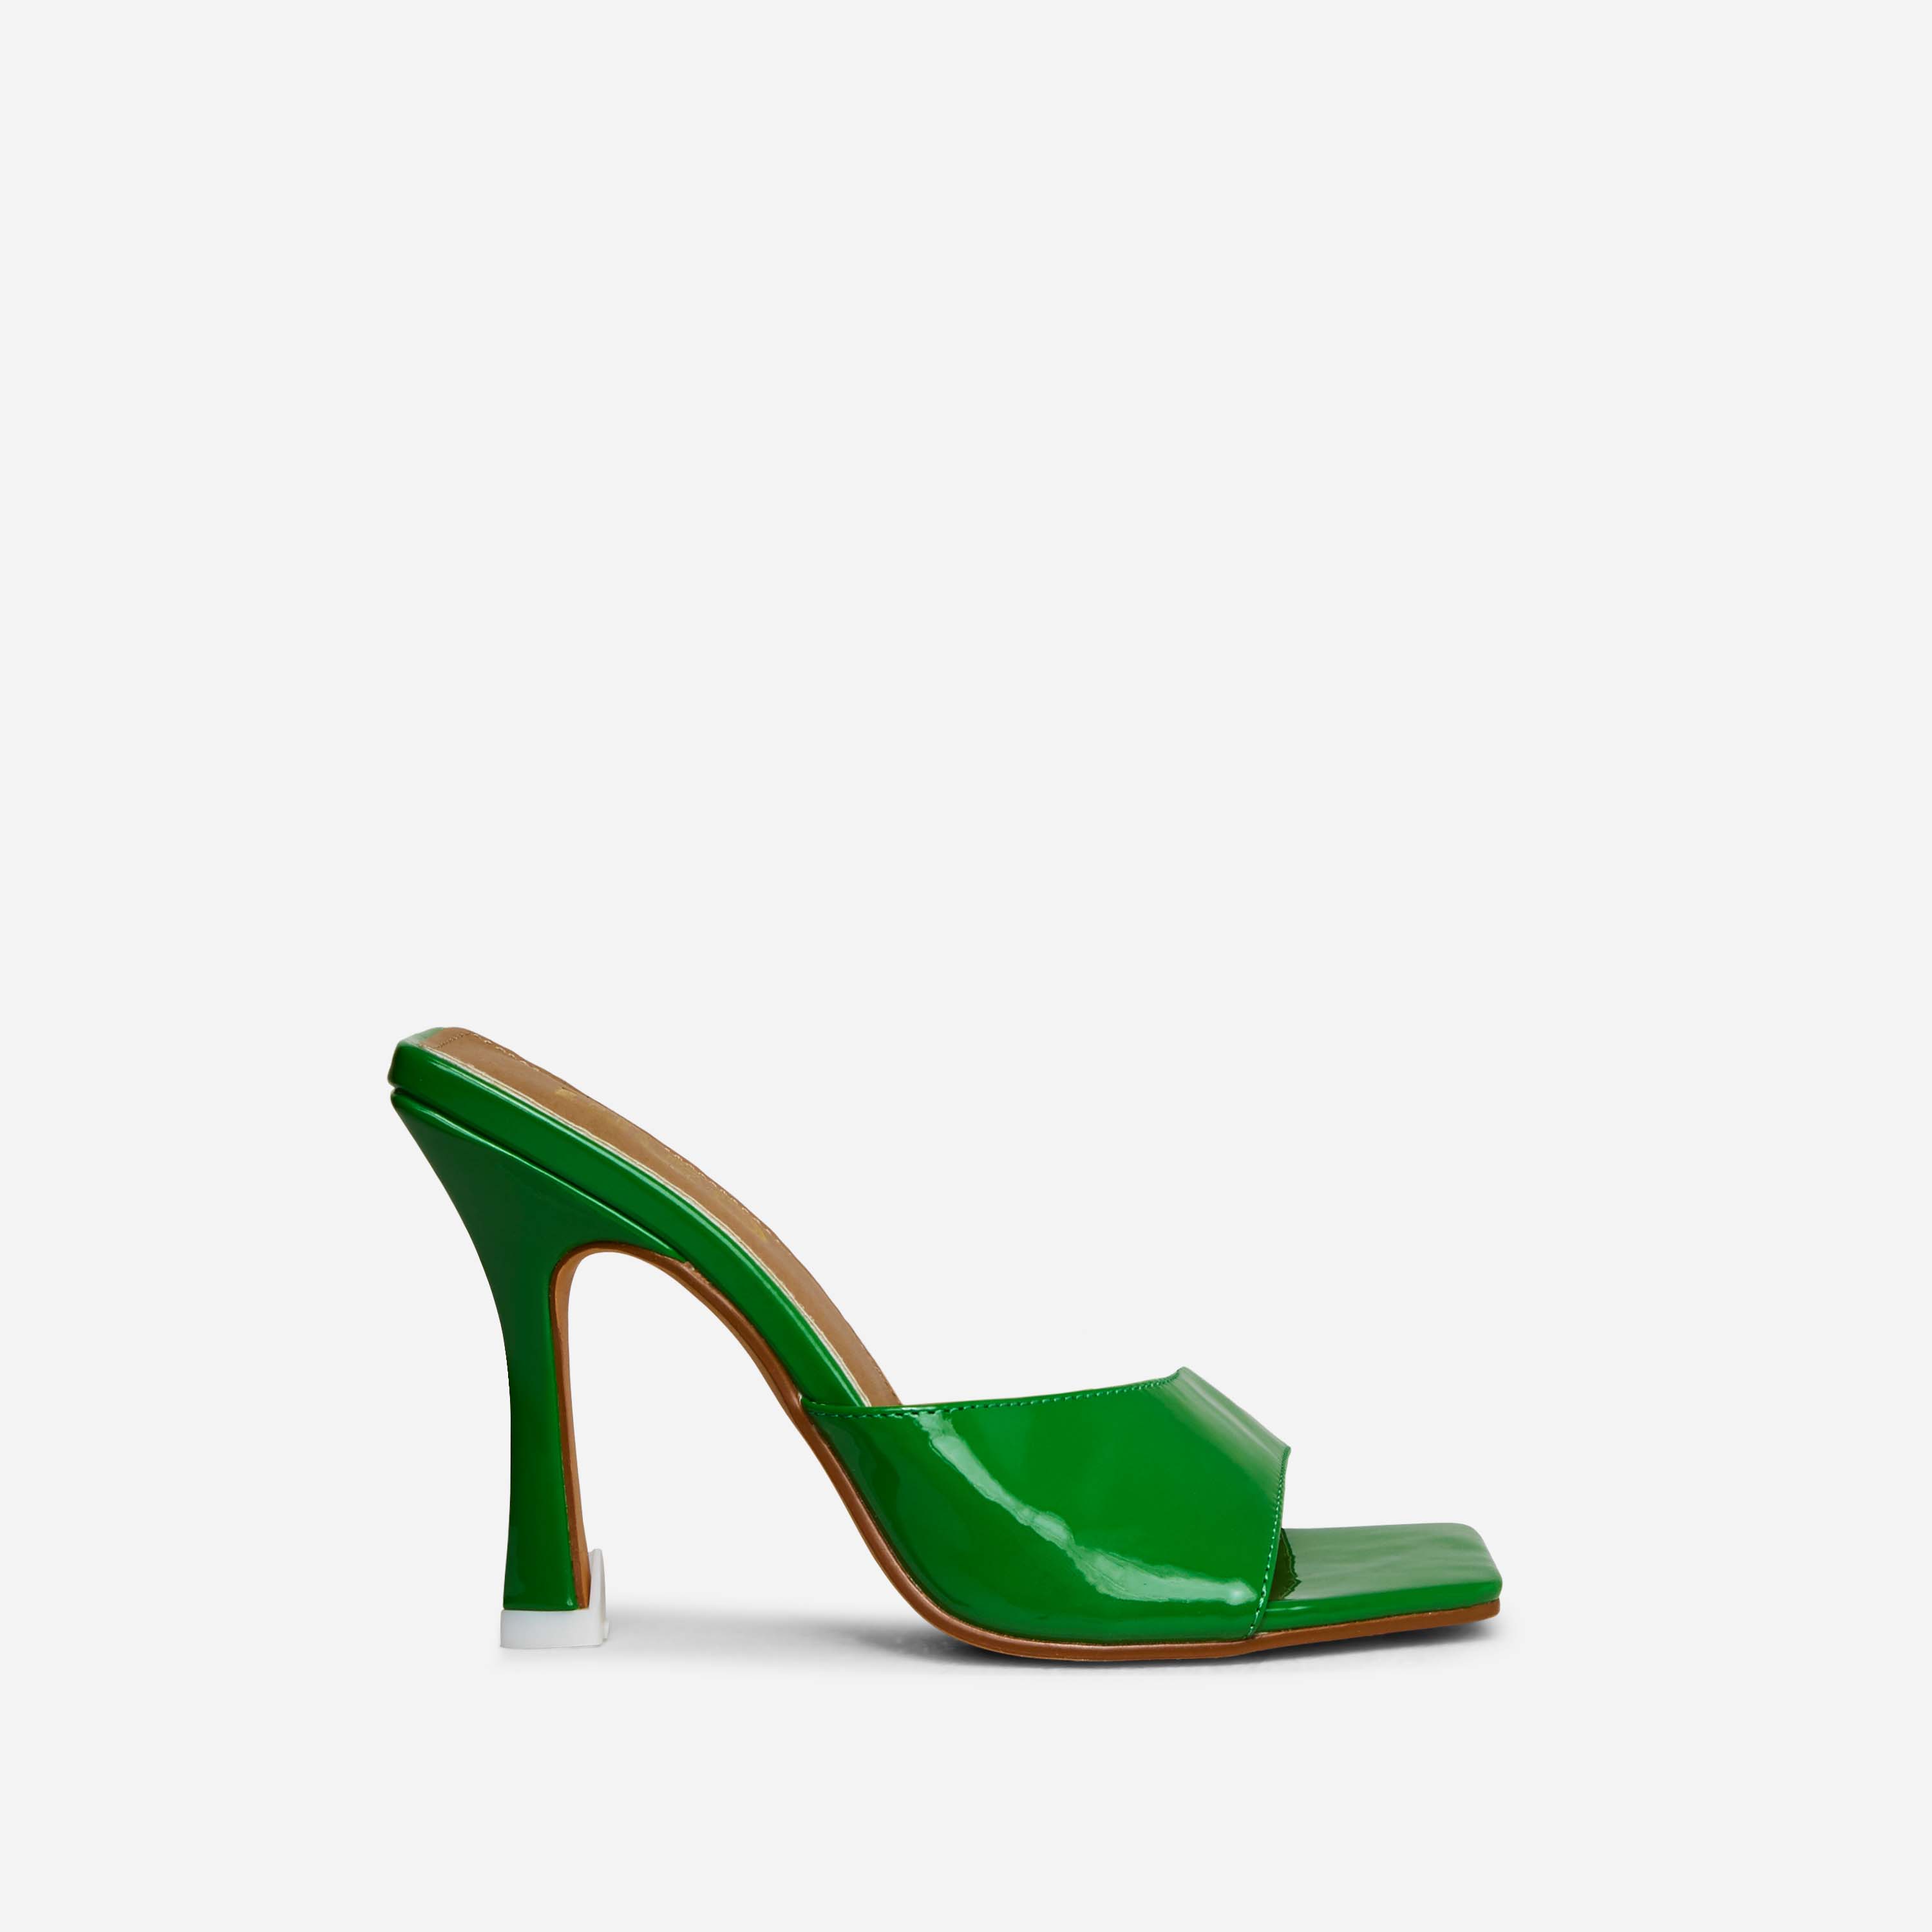 Dolce-Vita Square Peep Toe Flared Heel Mule In Green Patent, Green